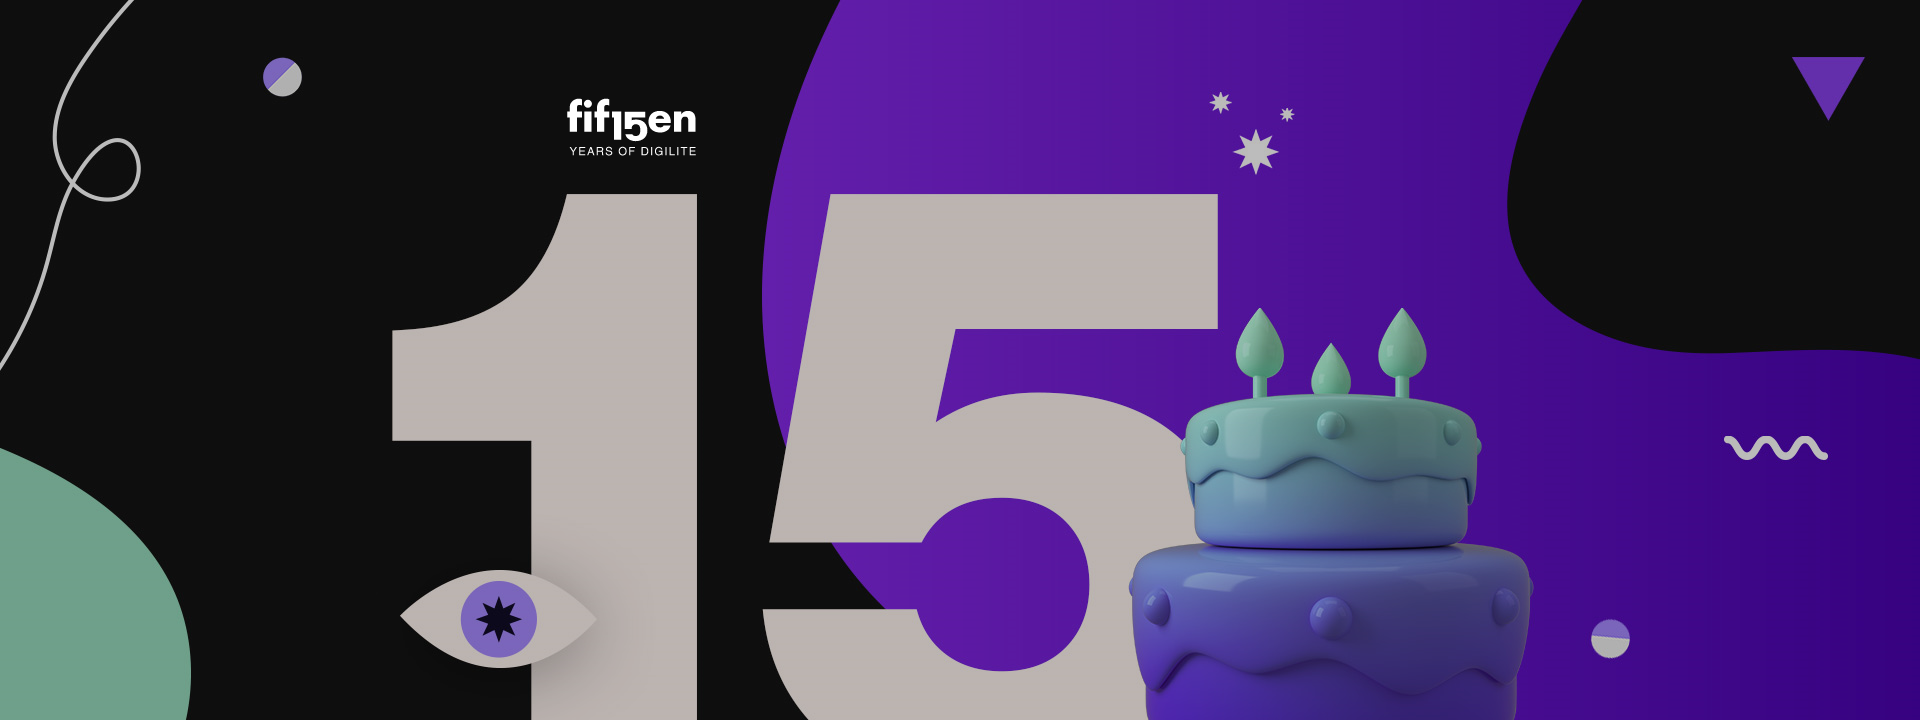 International Digital Agency Digilite Celebrates its 15th Birthday